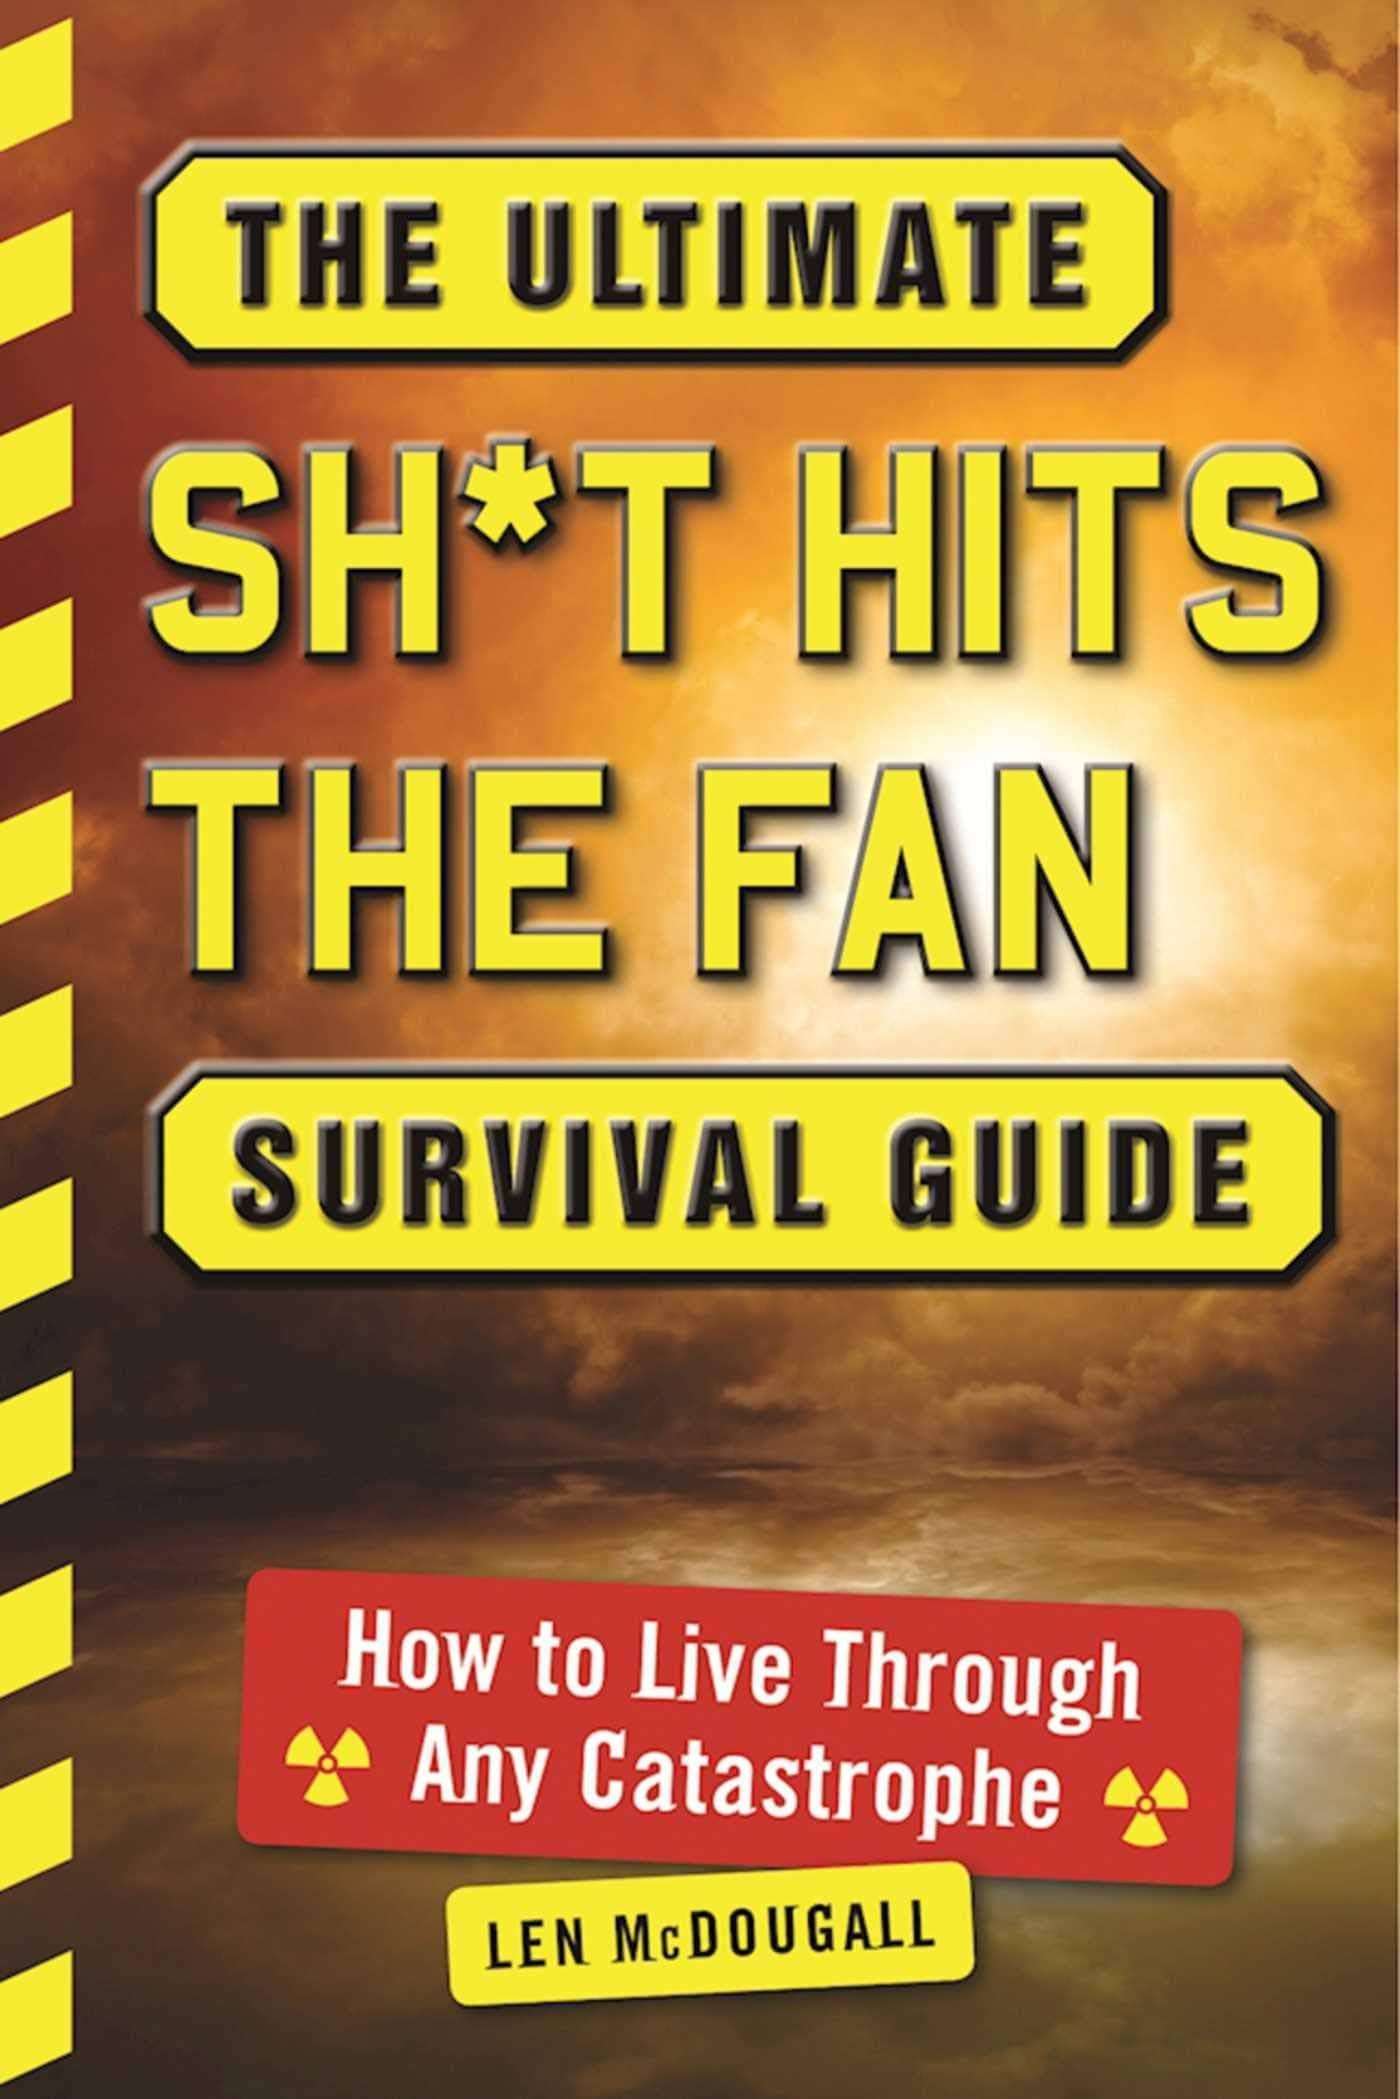 The Ultimate SHTF Survival Guide